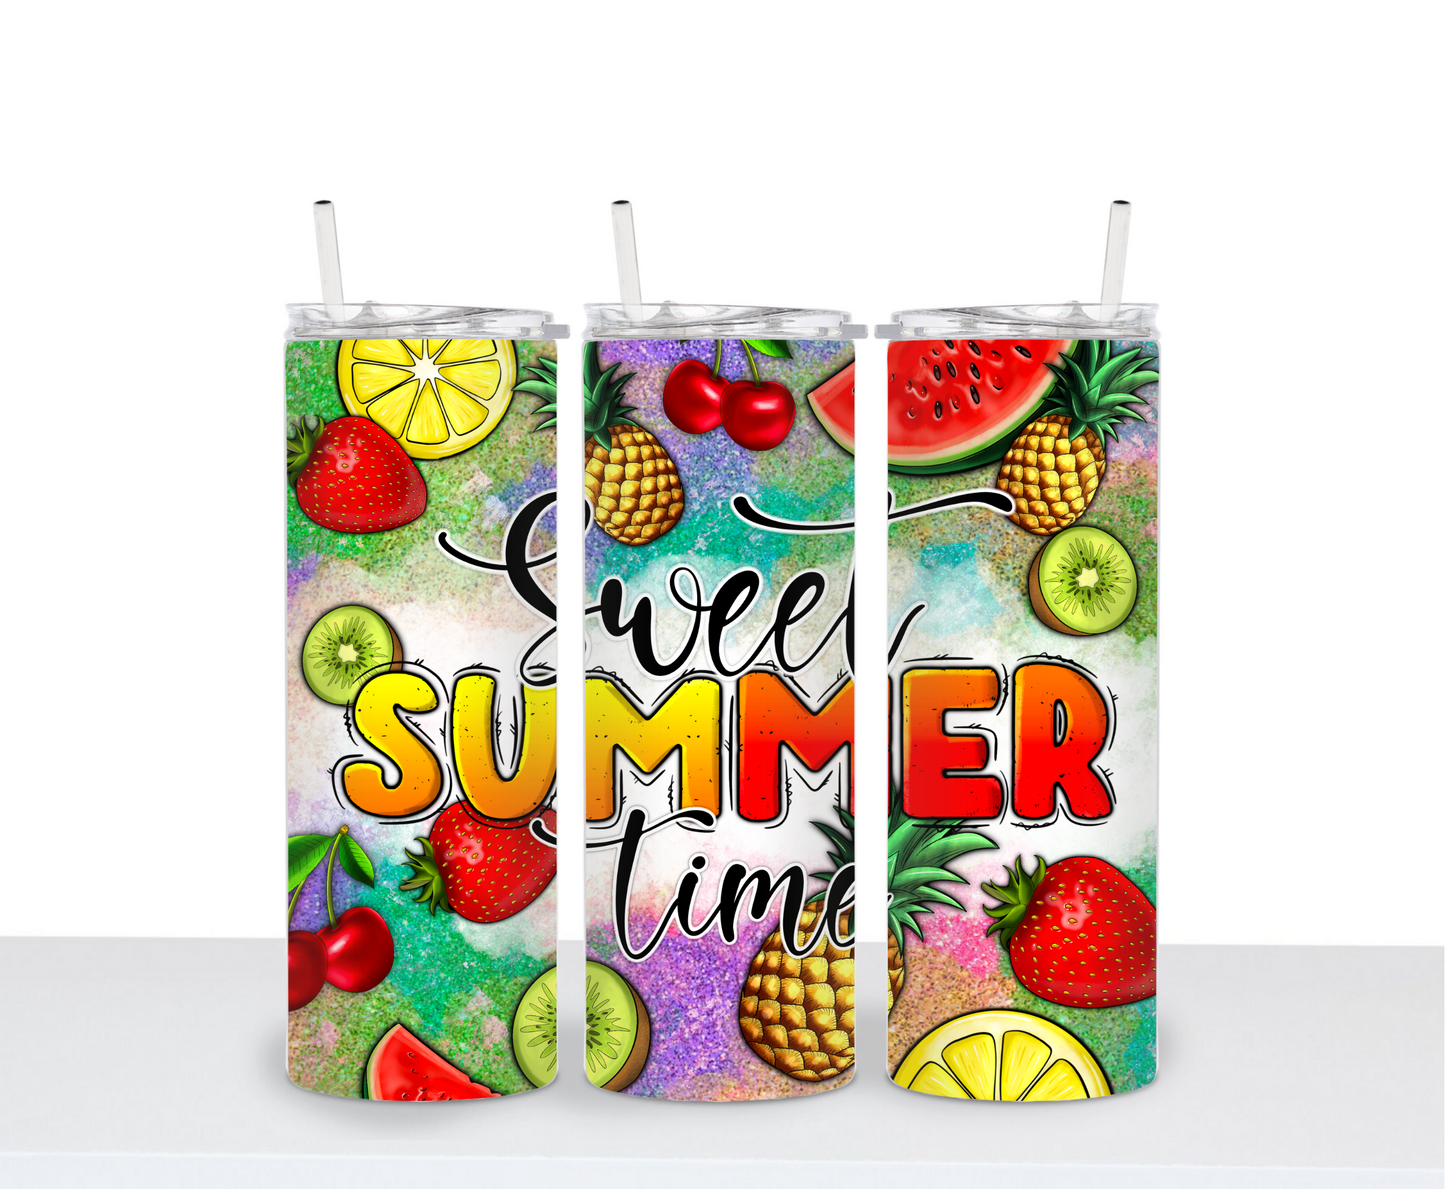 Sweet Summer Time (Mixed Fruit)